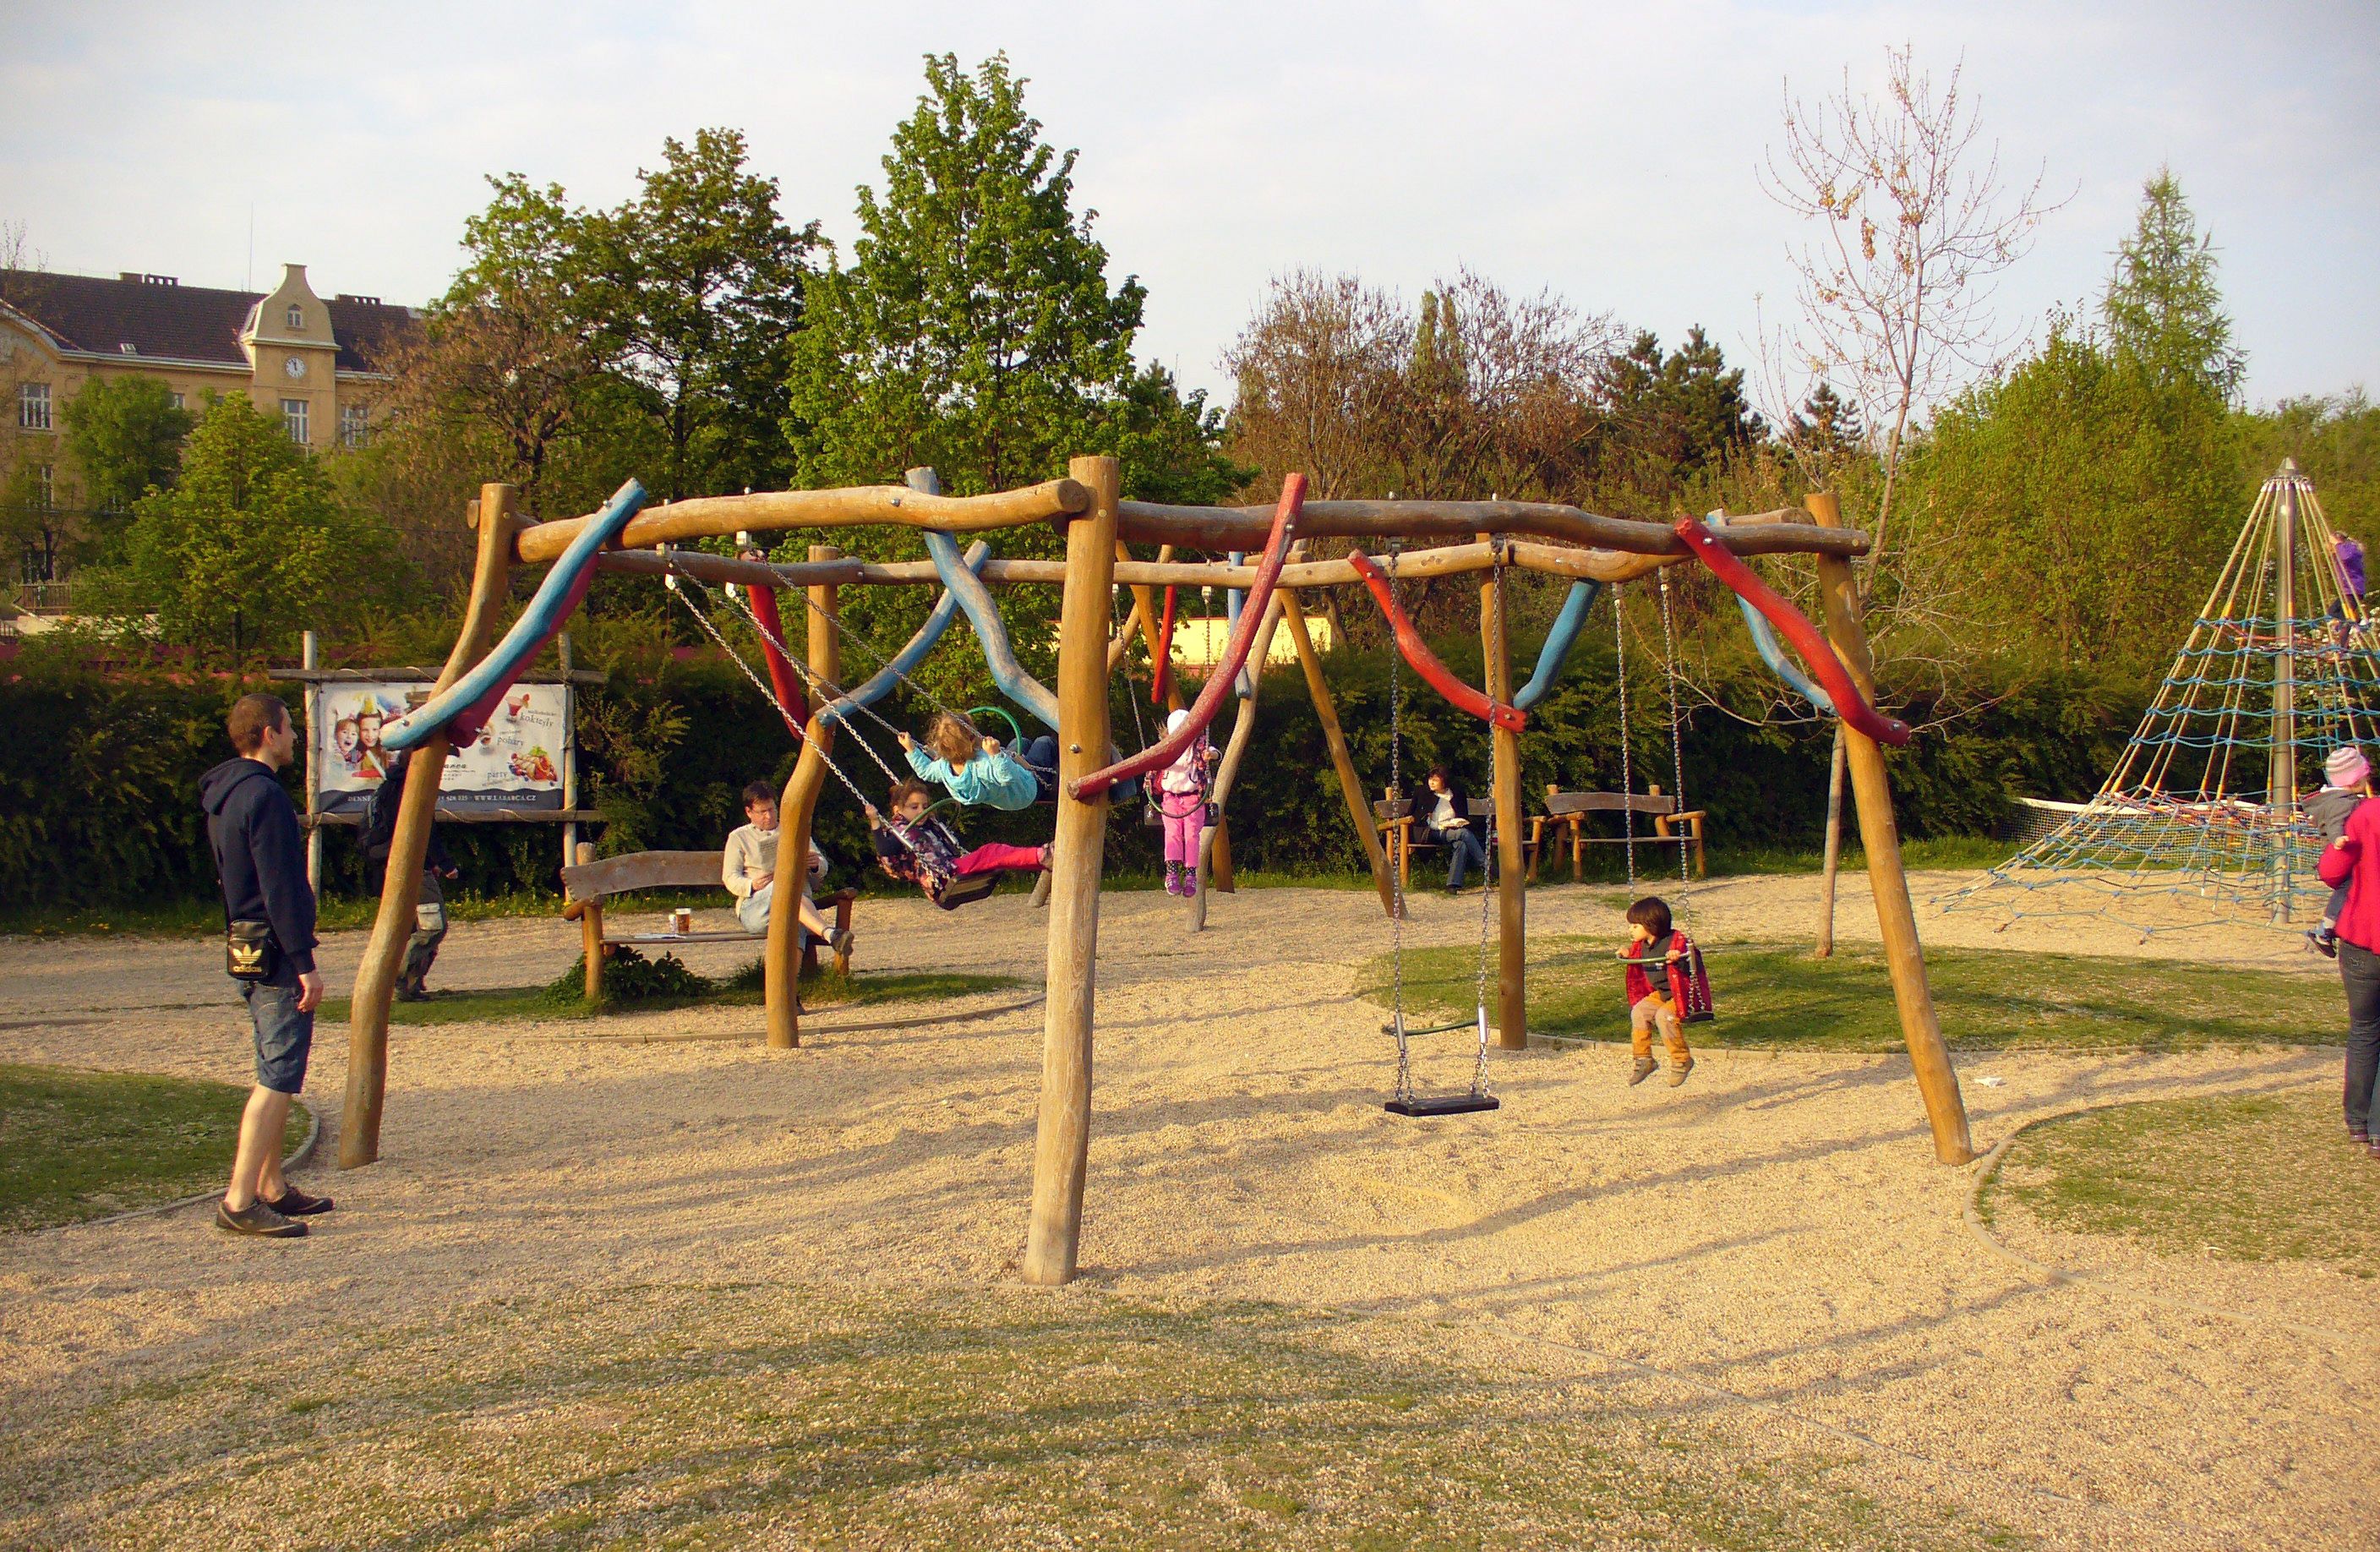 Free Image: Children playground | Libreshot Public Domain Photos